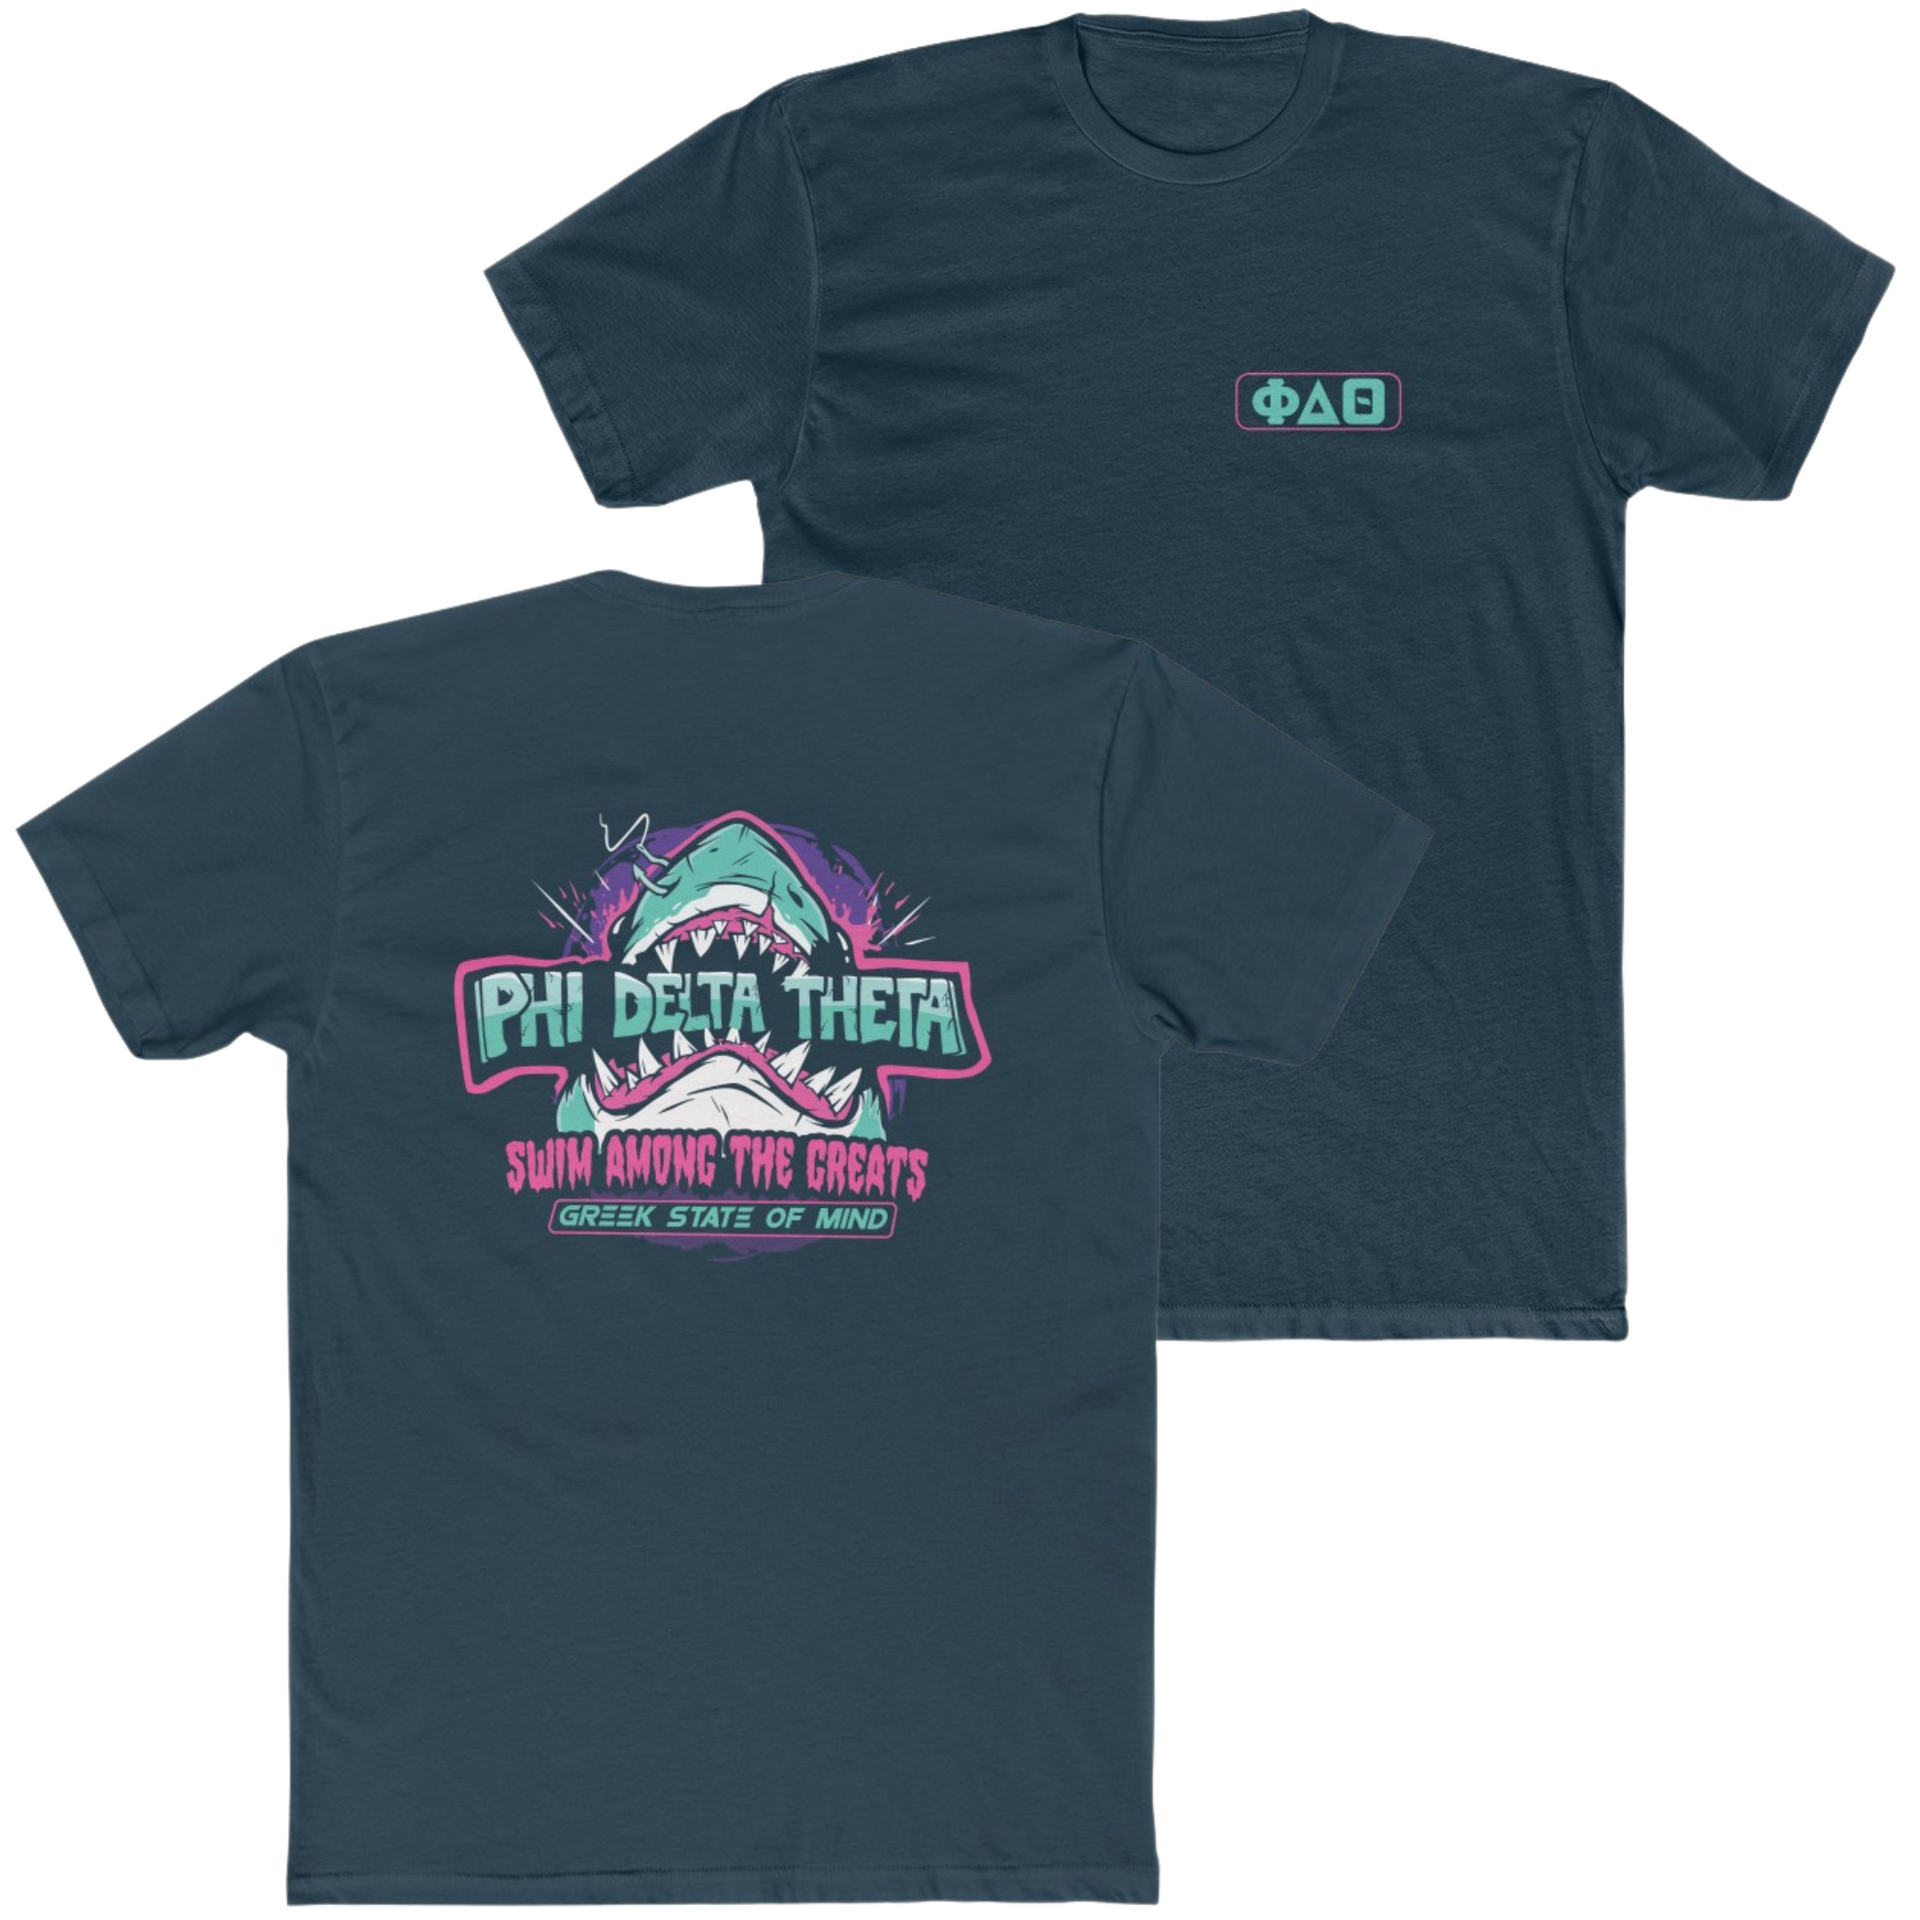 Navy Phi Delta Theta Graphic T-Shirt | The Deep End | phi delta theta fraternity greek apparel  